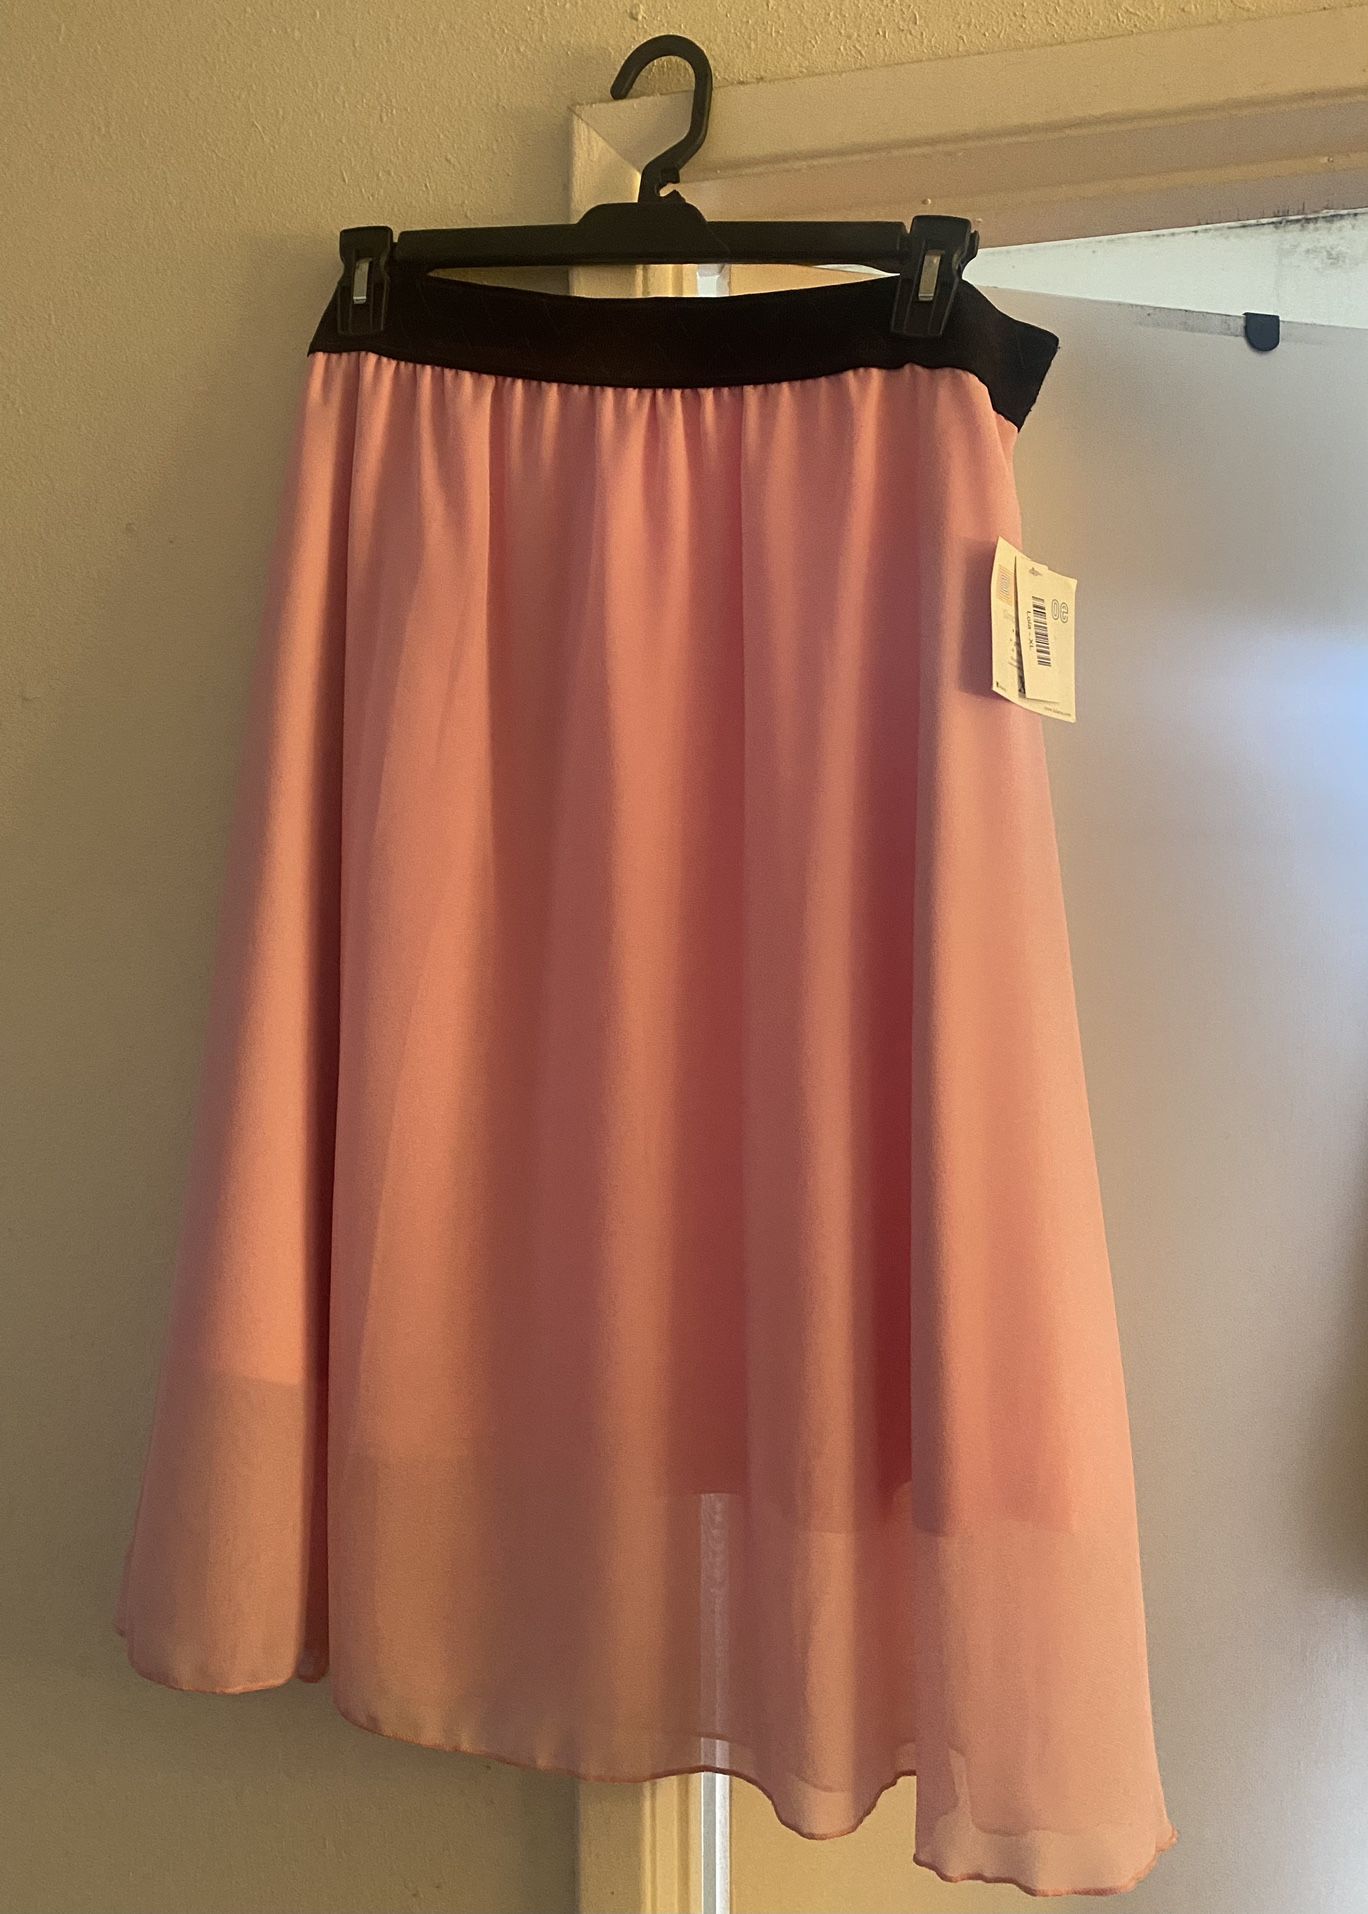 Lularoe Pink Skirt 2XL